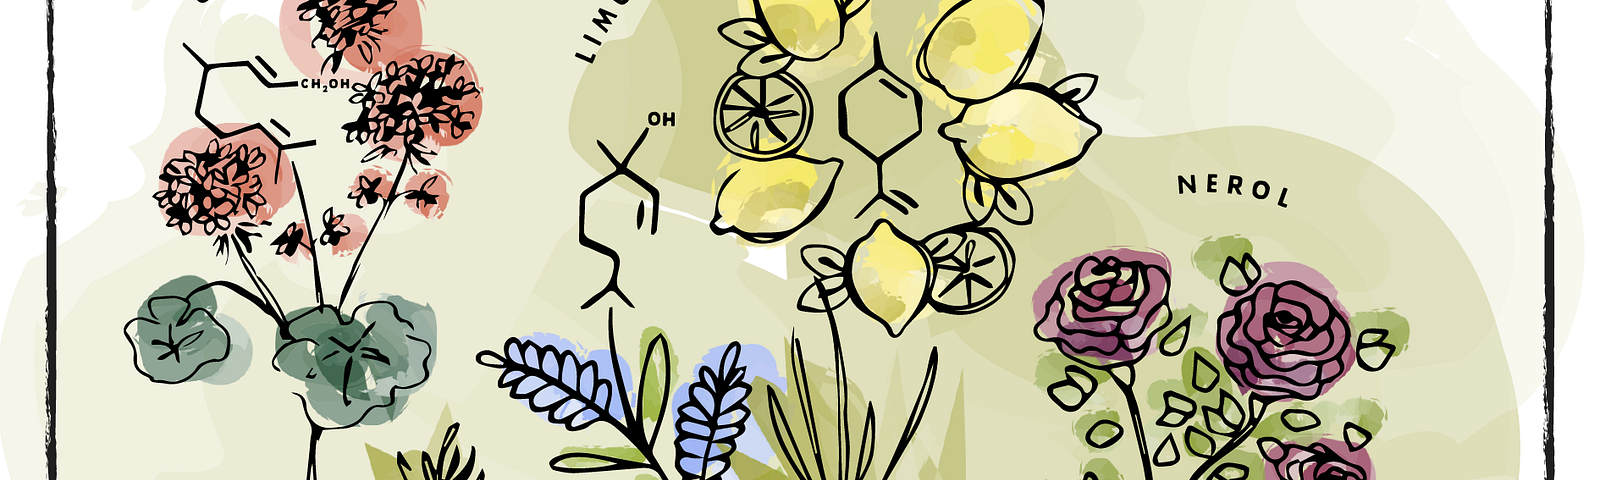 A drawing of four common terpene aromas (geranium, lemon, rose, lavender) next to their chemical symbols